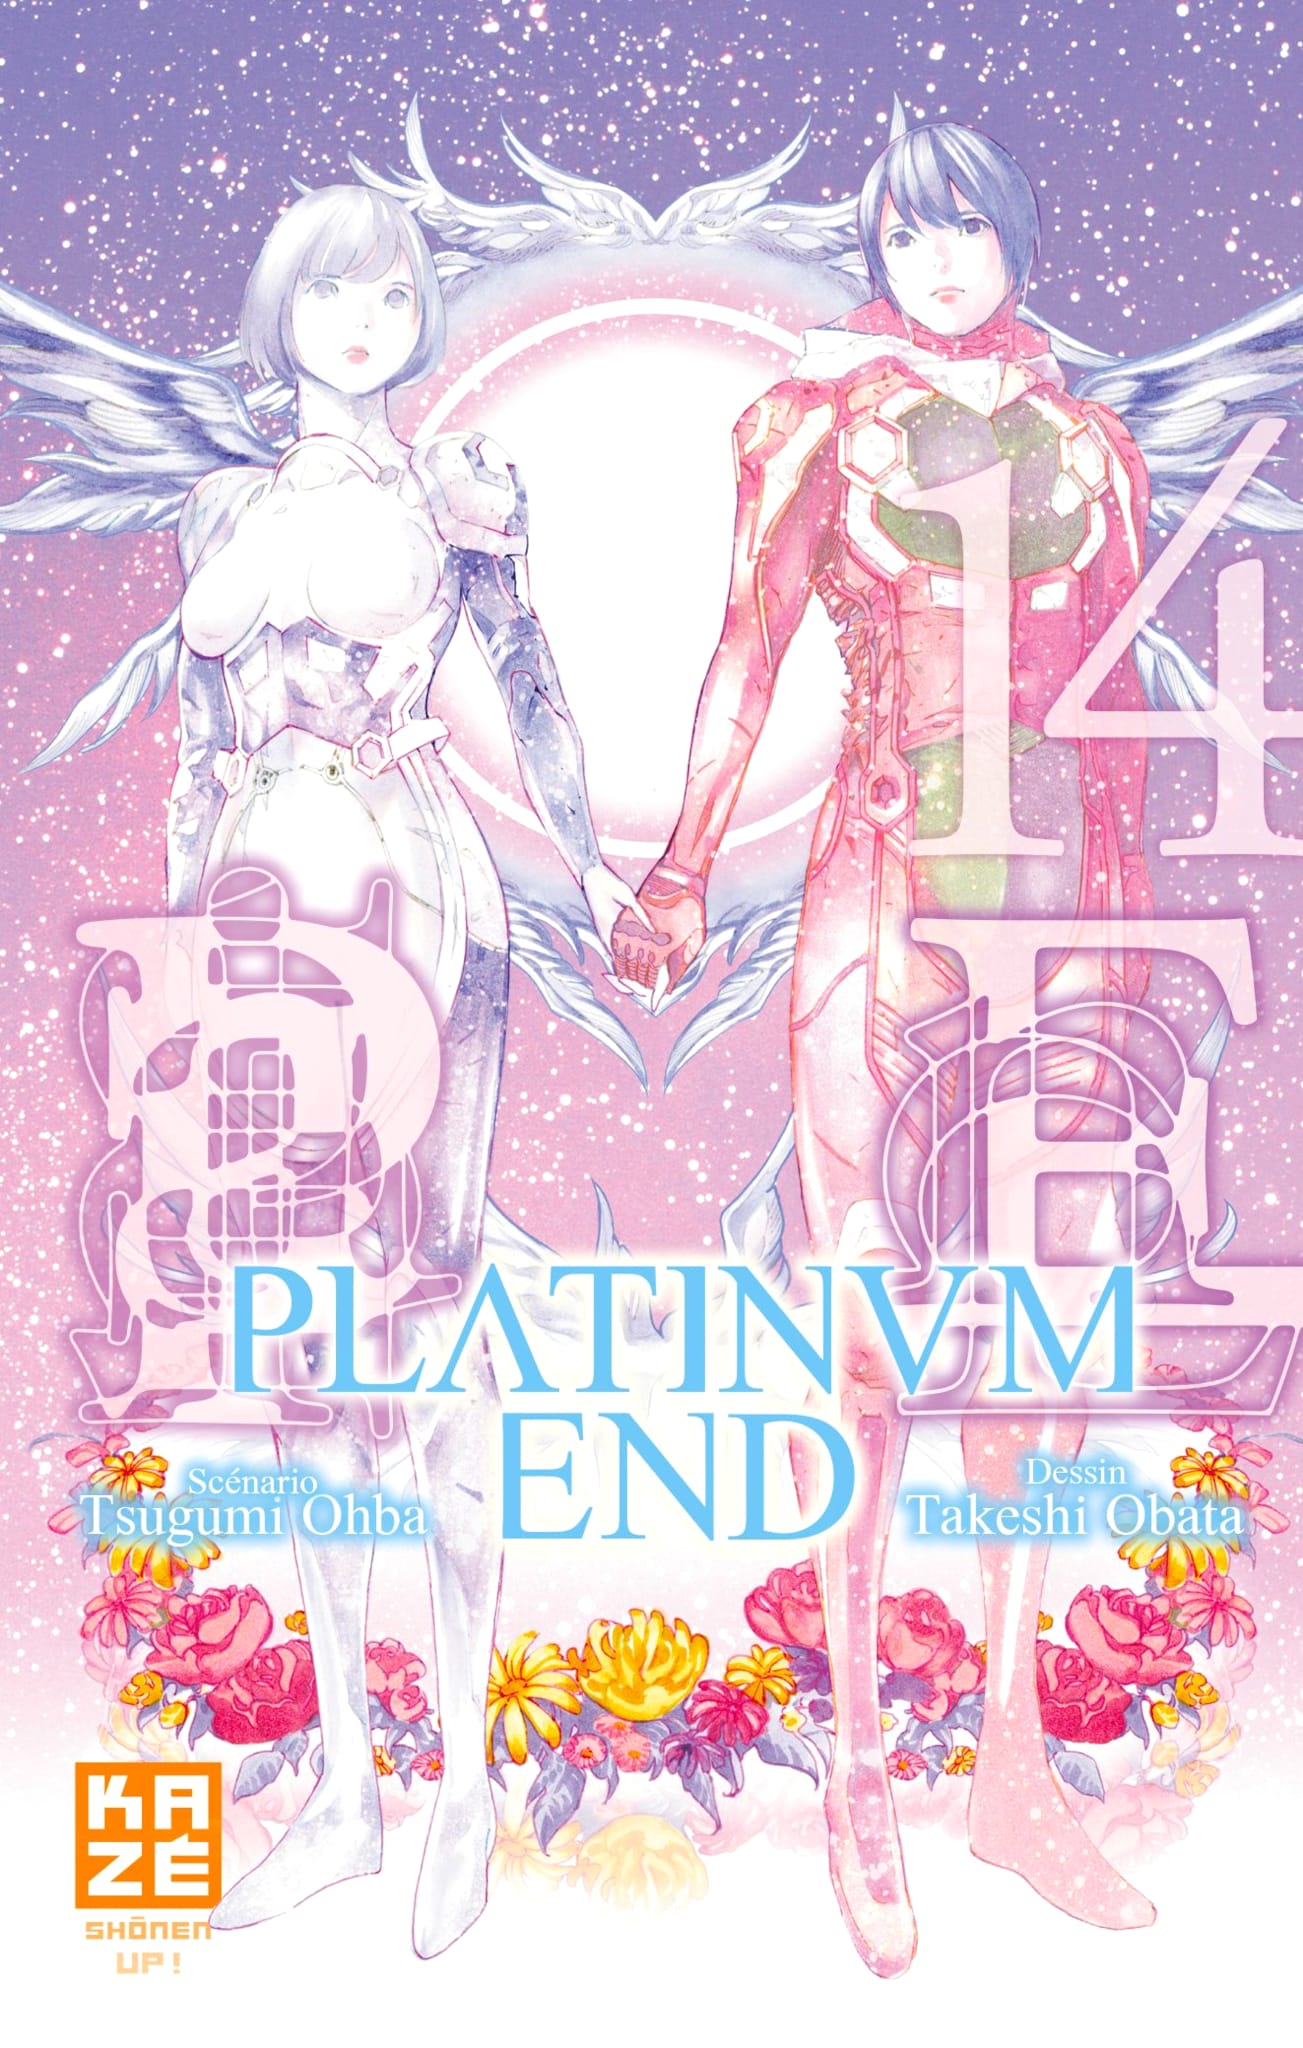 Tome 14 du manga Platinum End